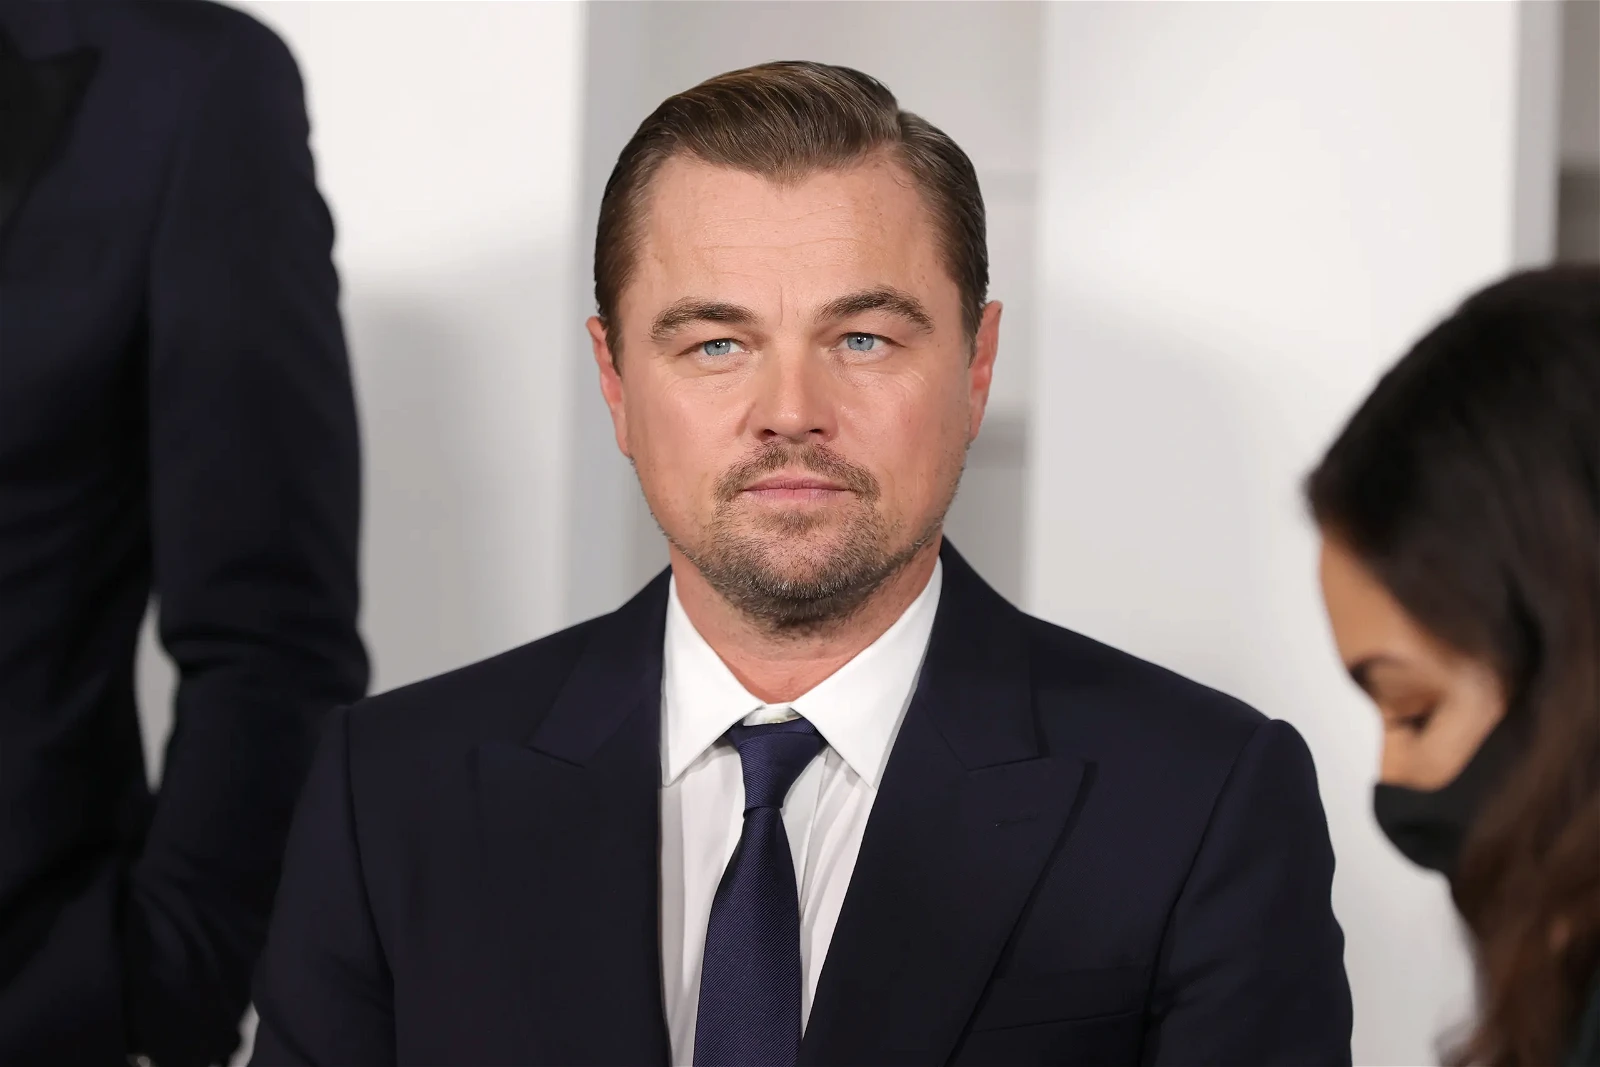 Leonardo DiCaprio is attached to Glenn Powell's dream role movie.